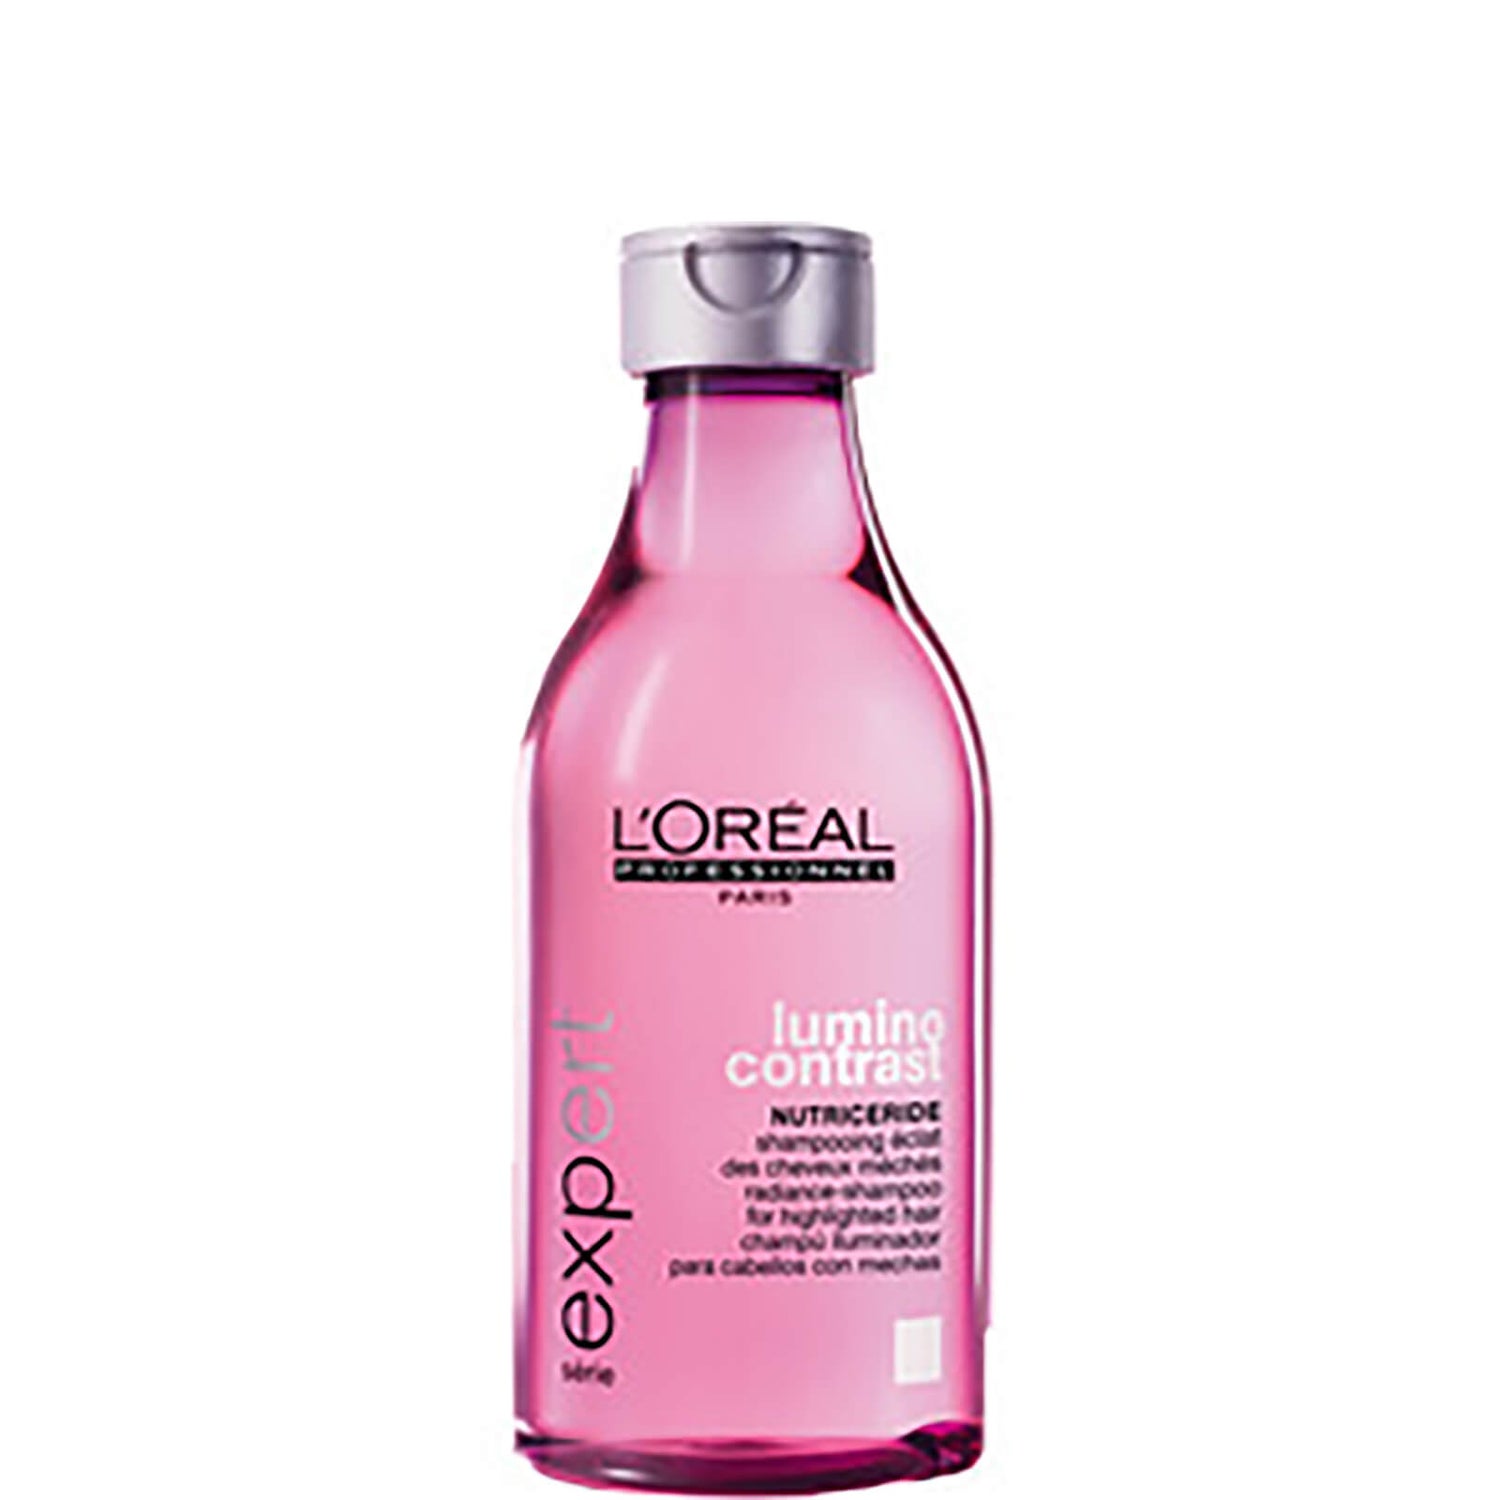 L'Oréal Professionnel Lumino Contrast Radiance Shampoo (250 ml)